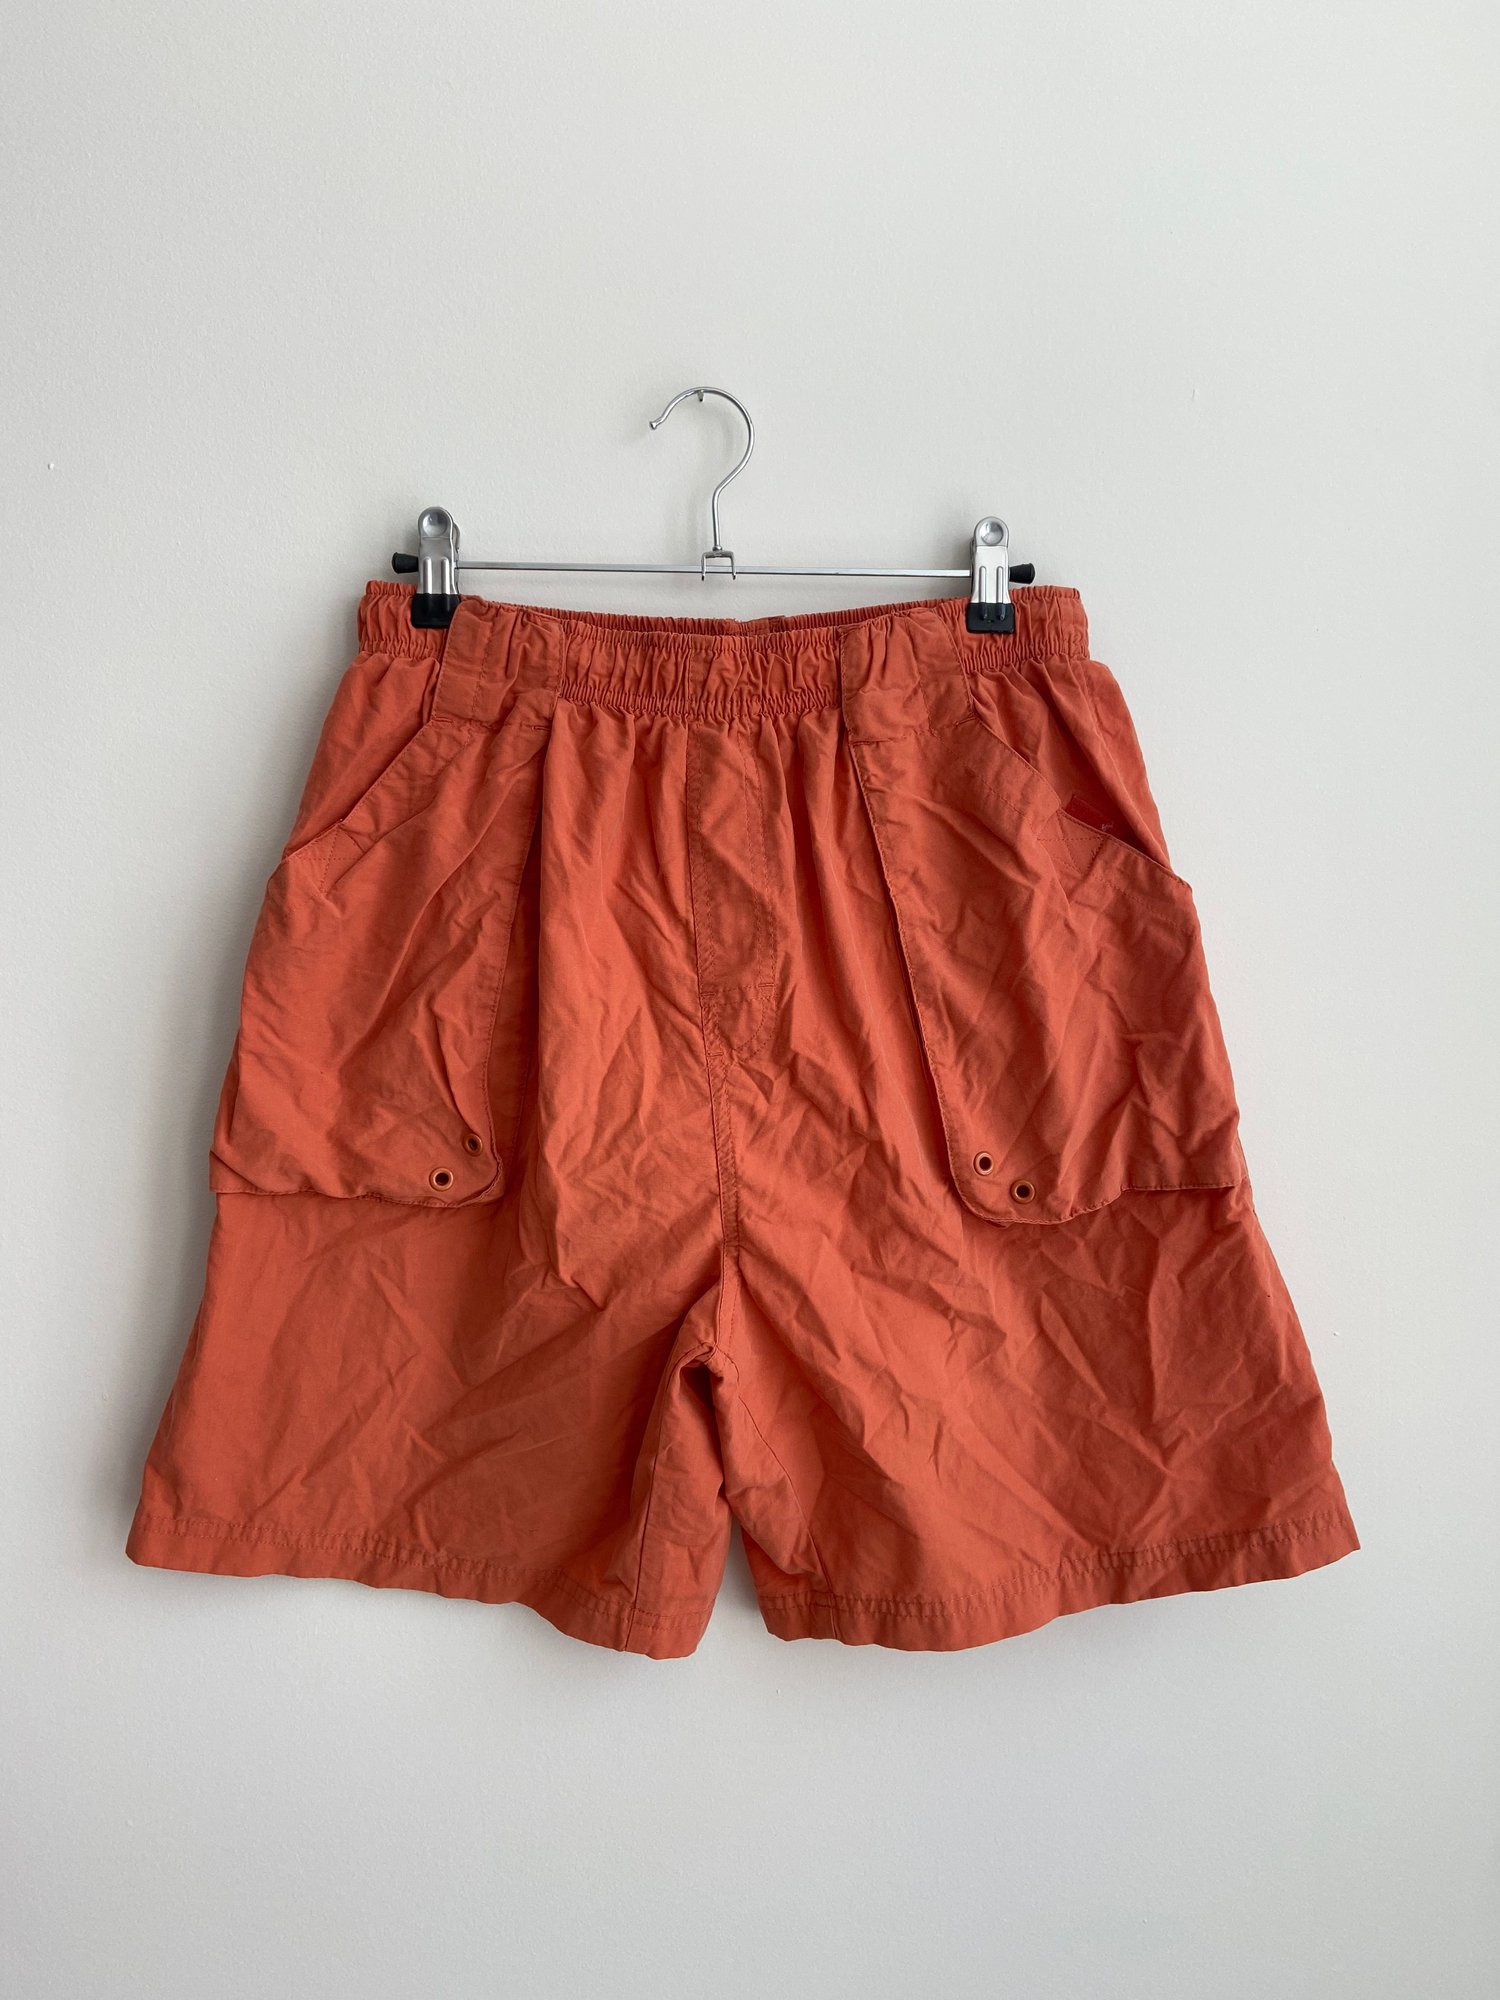 sweet orange swim trunks 